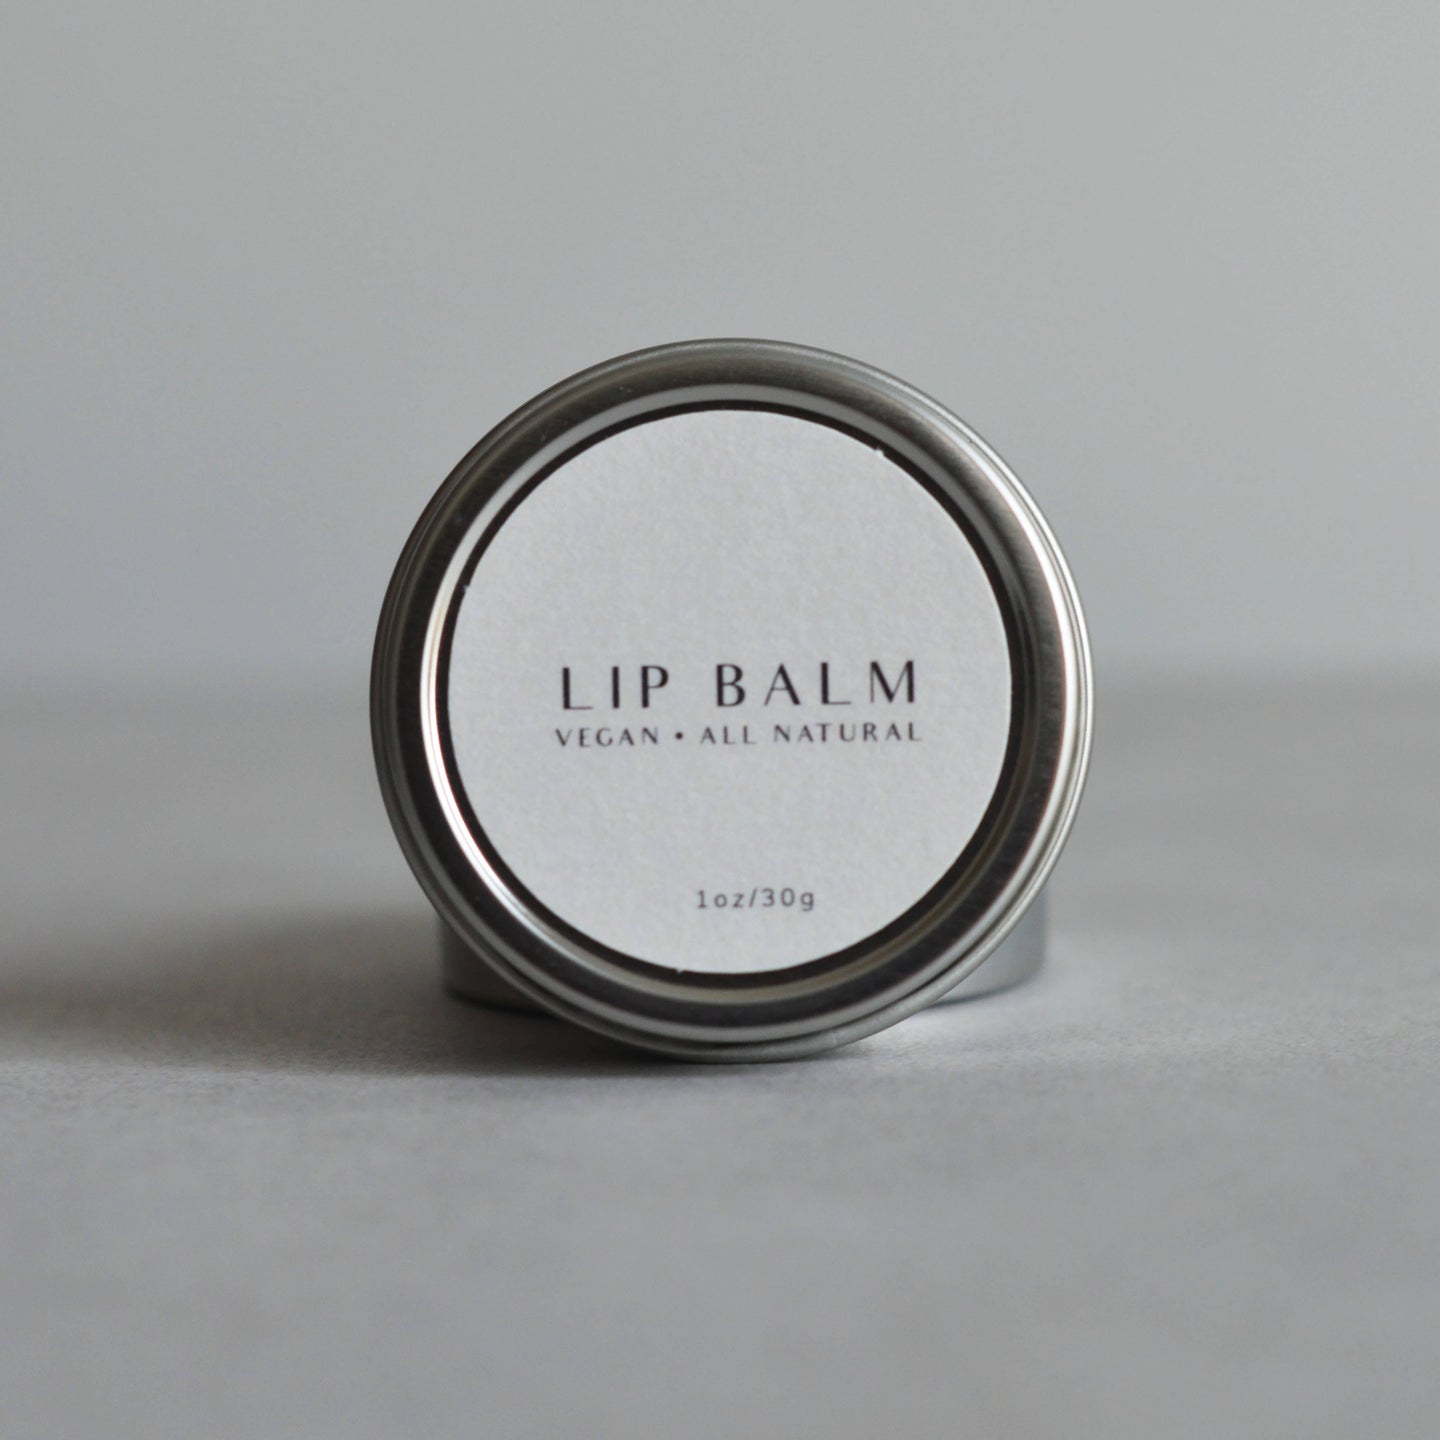 Cedar and Myrrh - [Clean Beauty Ritual] Vegan + All Natural Lip Balm